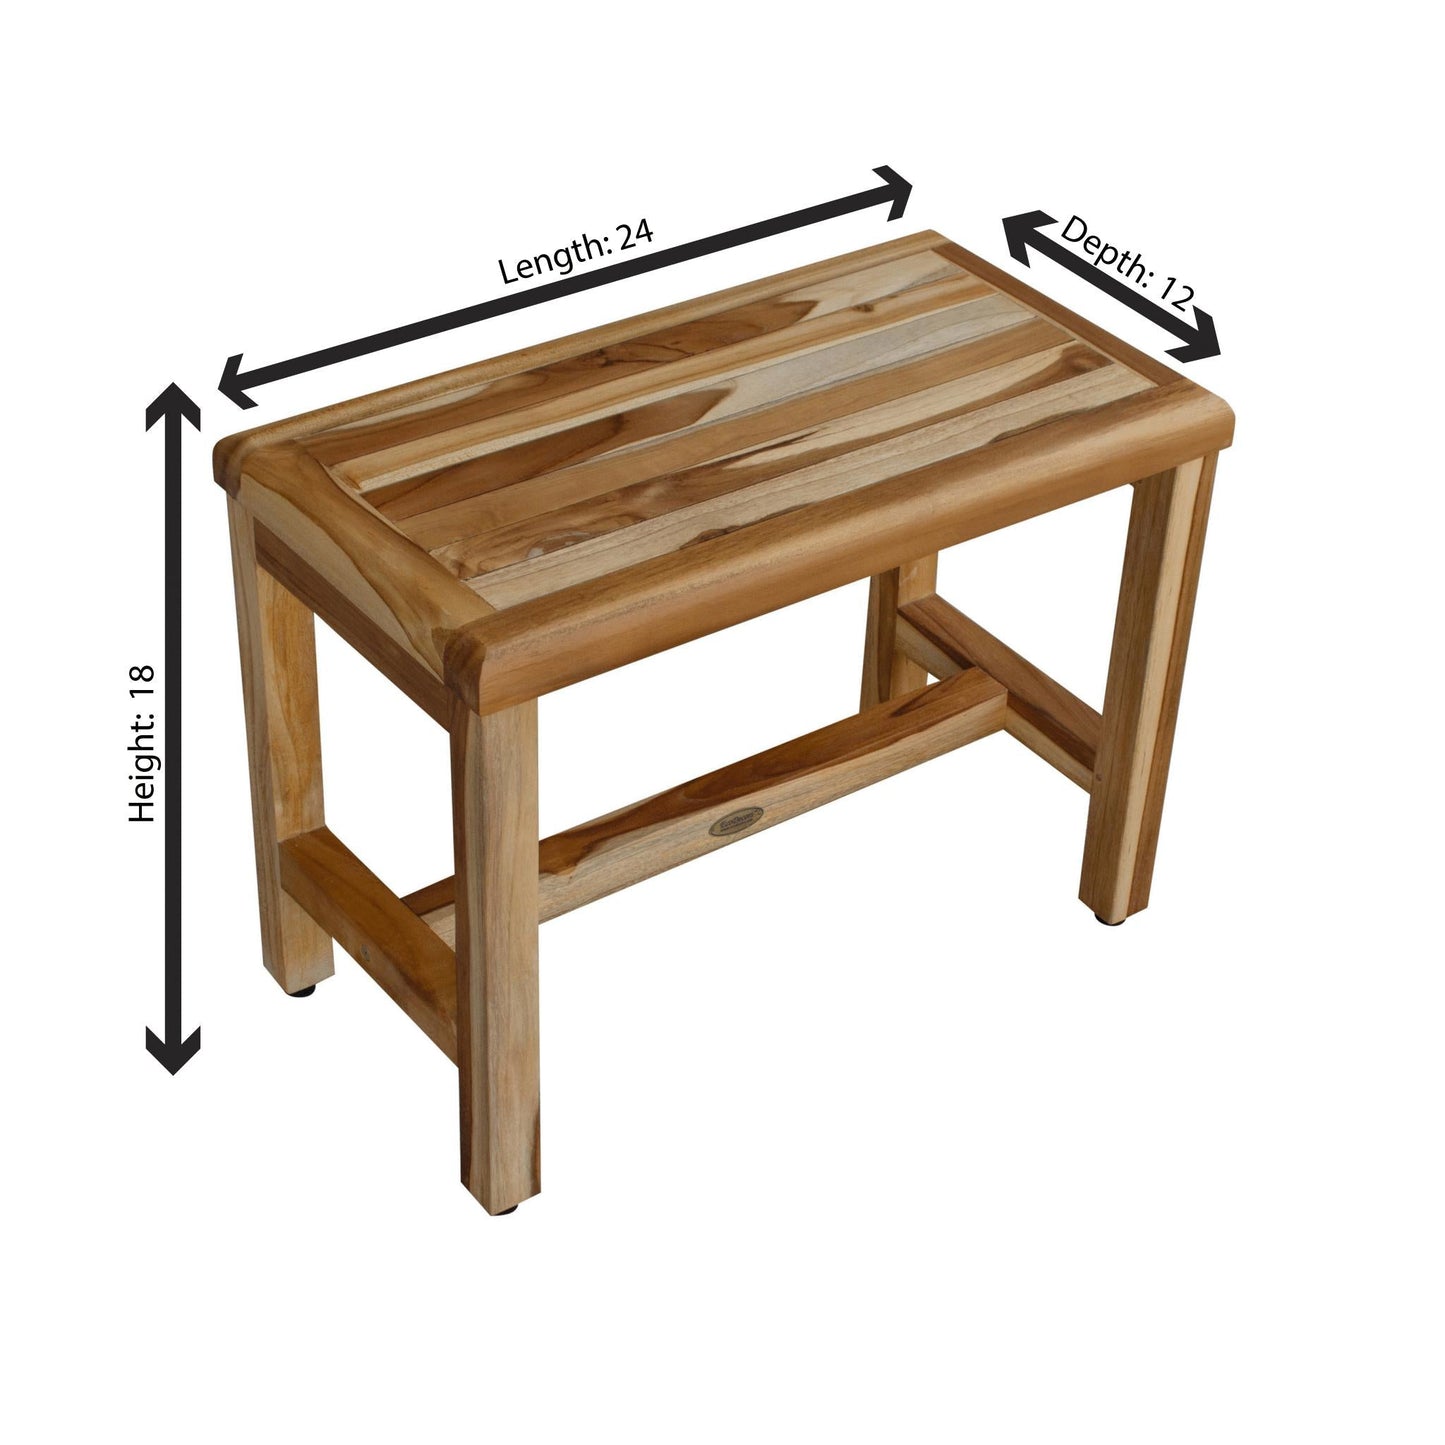 EcoDecors Eleganto 24" EarthyTeak Solid Teak Wood Shower Bench